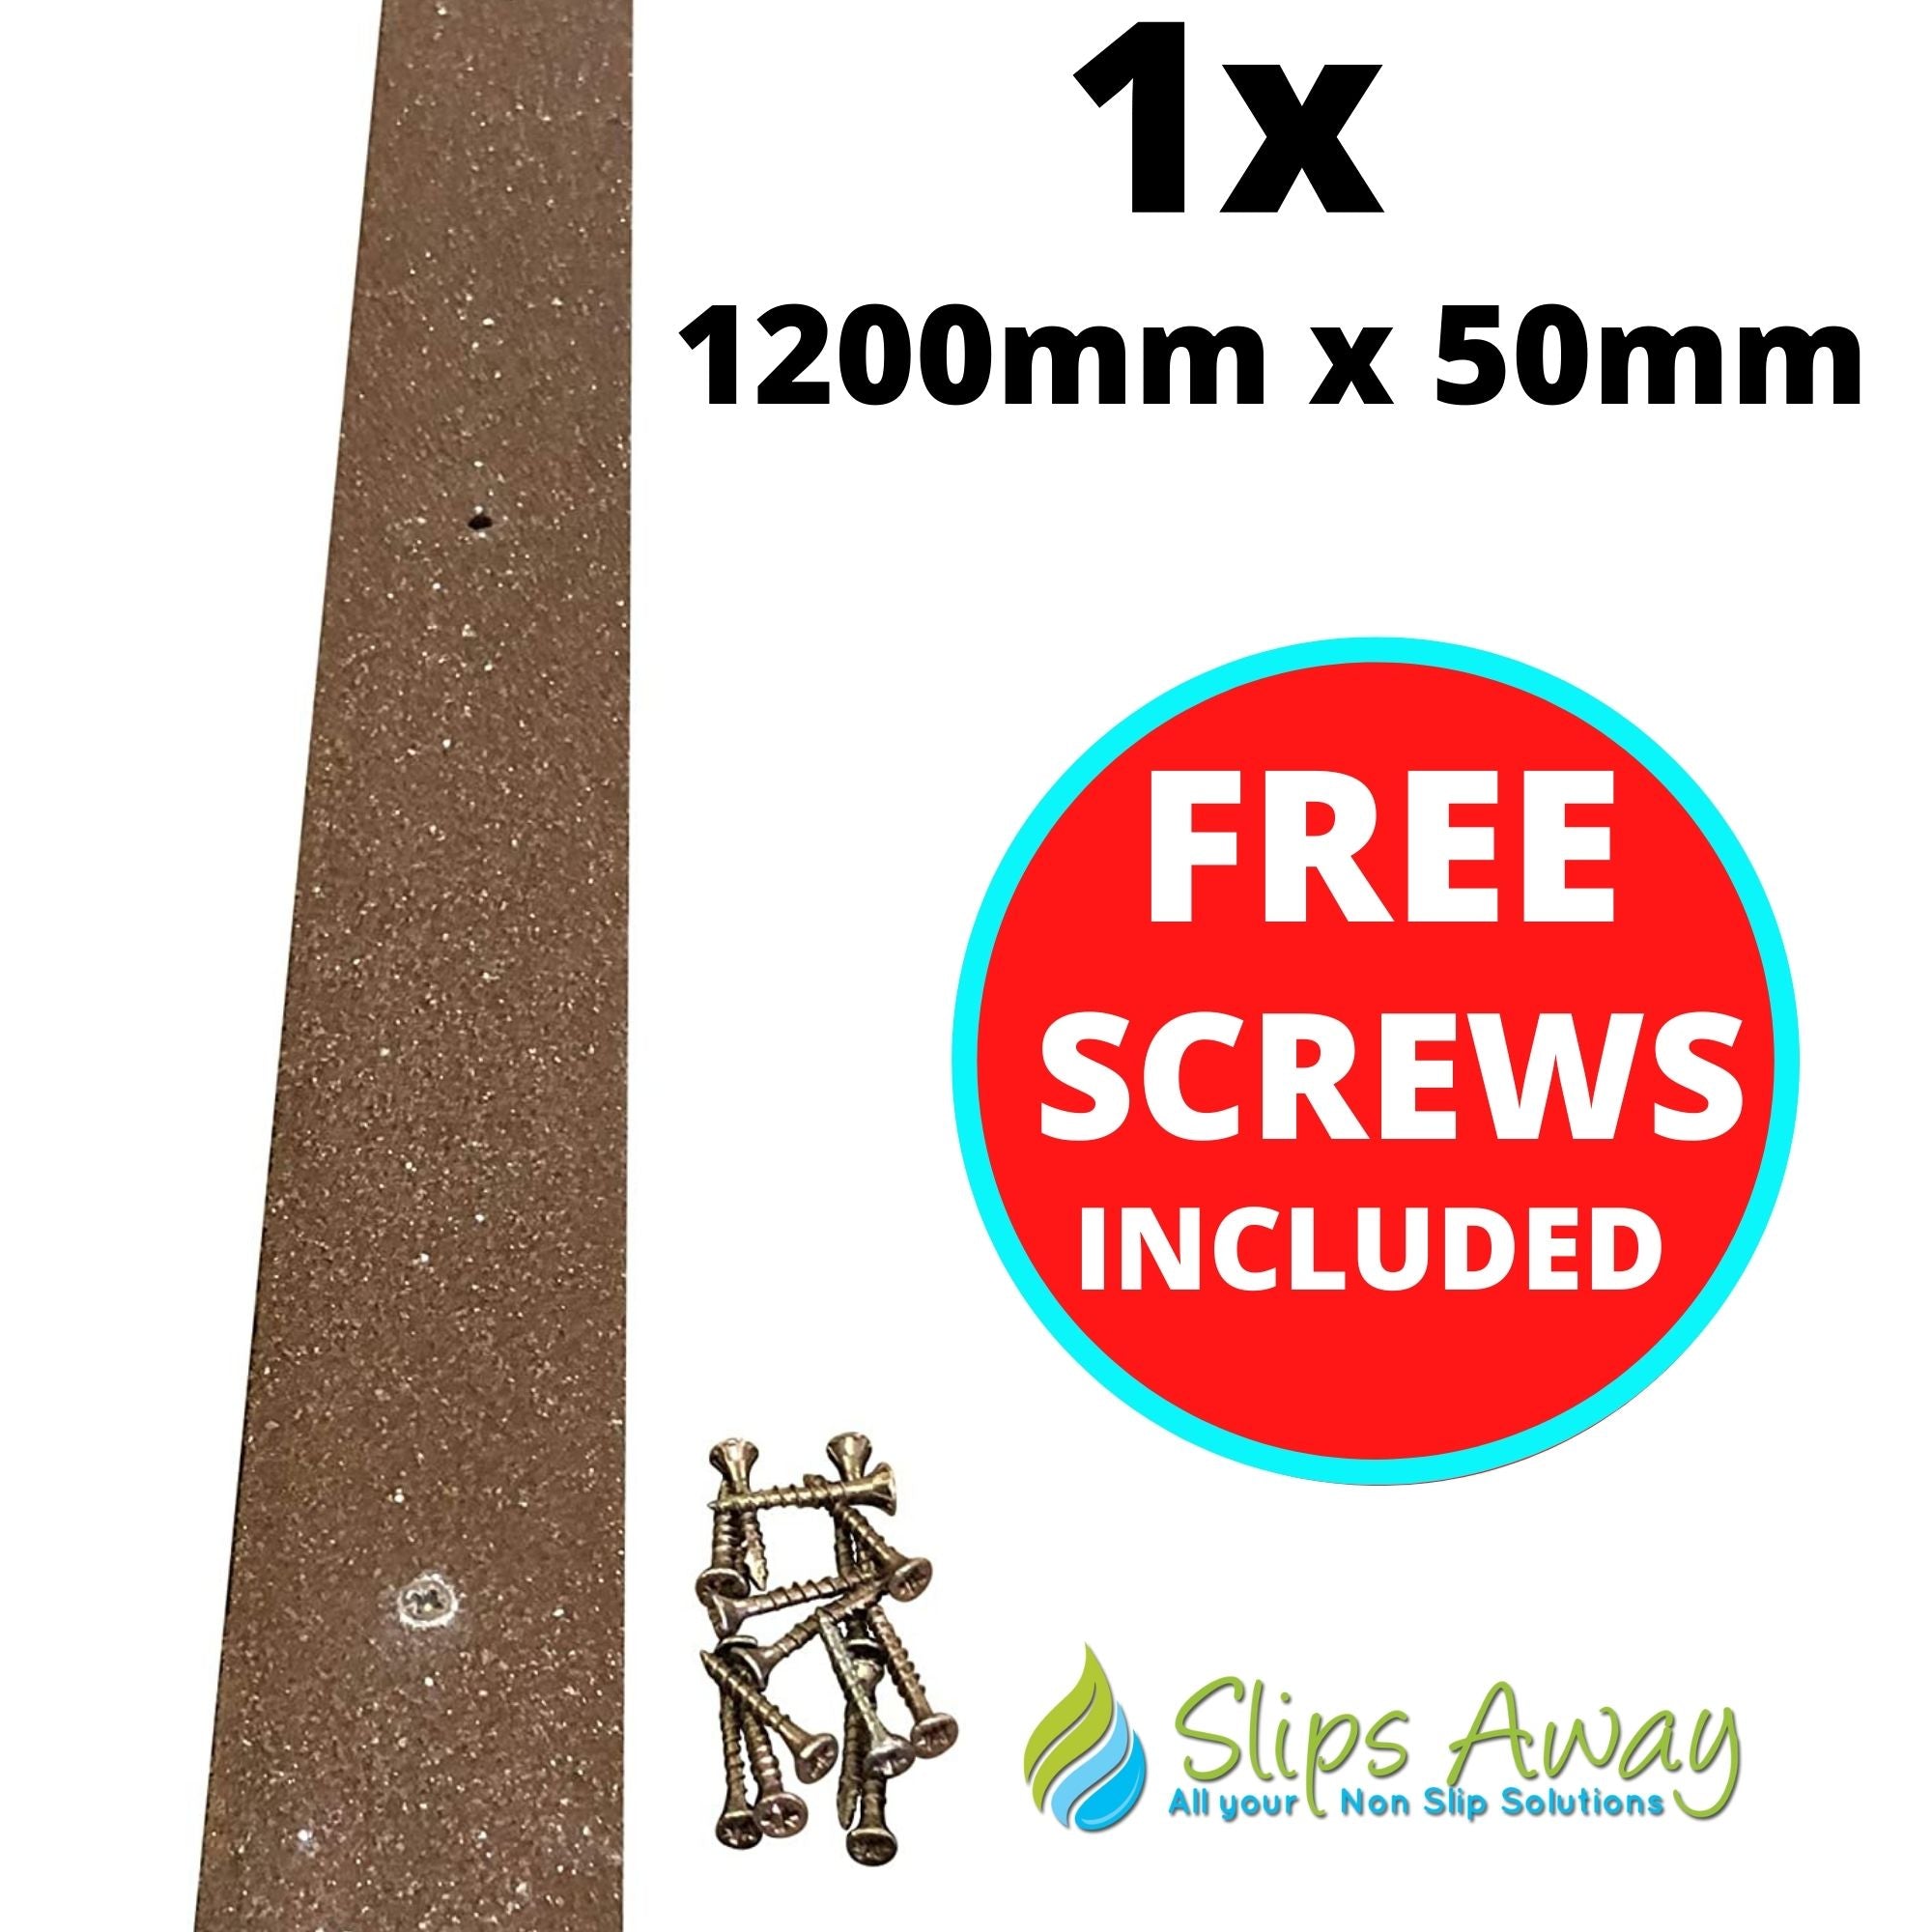 Brown Non Slip Decking Strips - Slips Away decking strip brown 1200mm x 50mm -# - 5061000044277 decking strip brown 1200mm x 50mm - 1200mm x 50mm